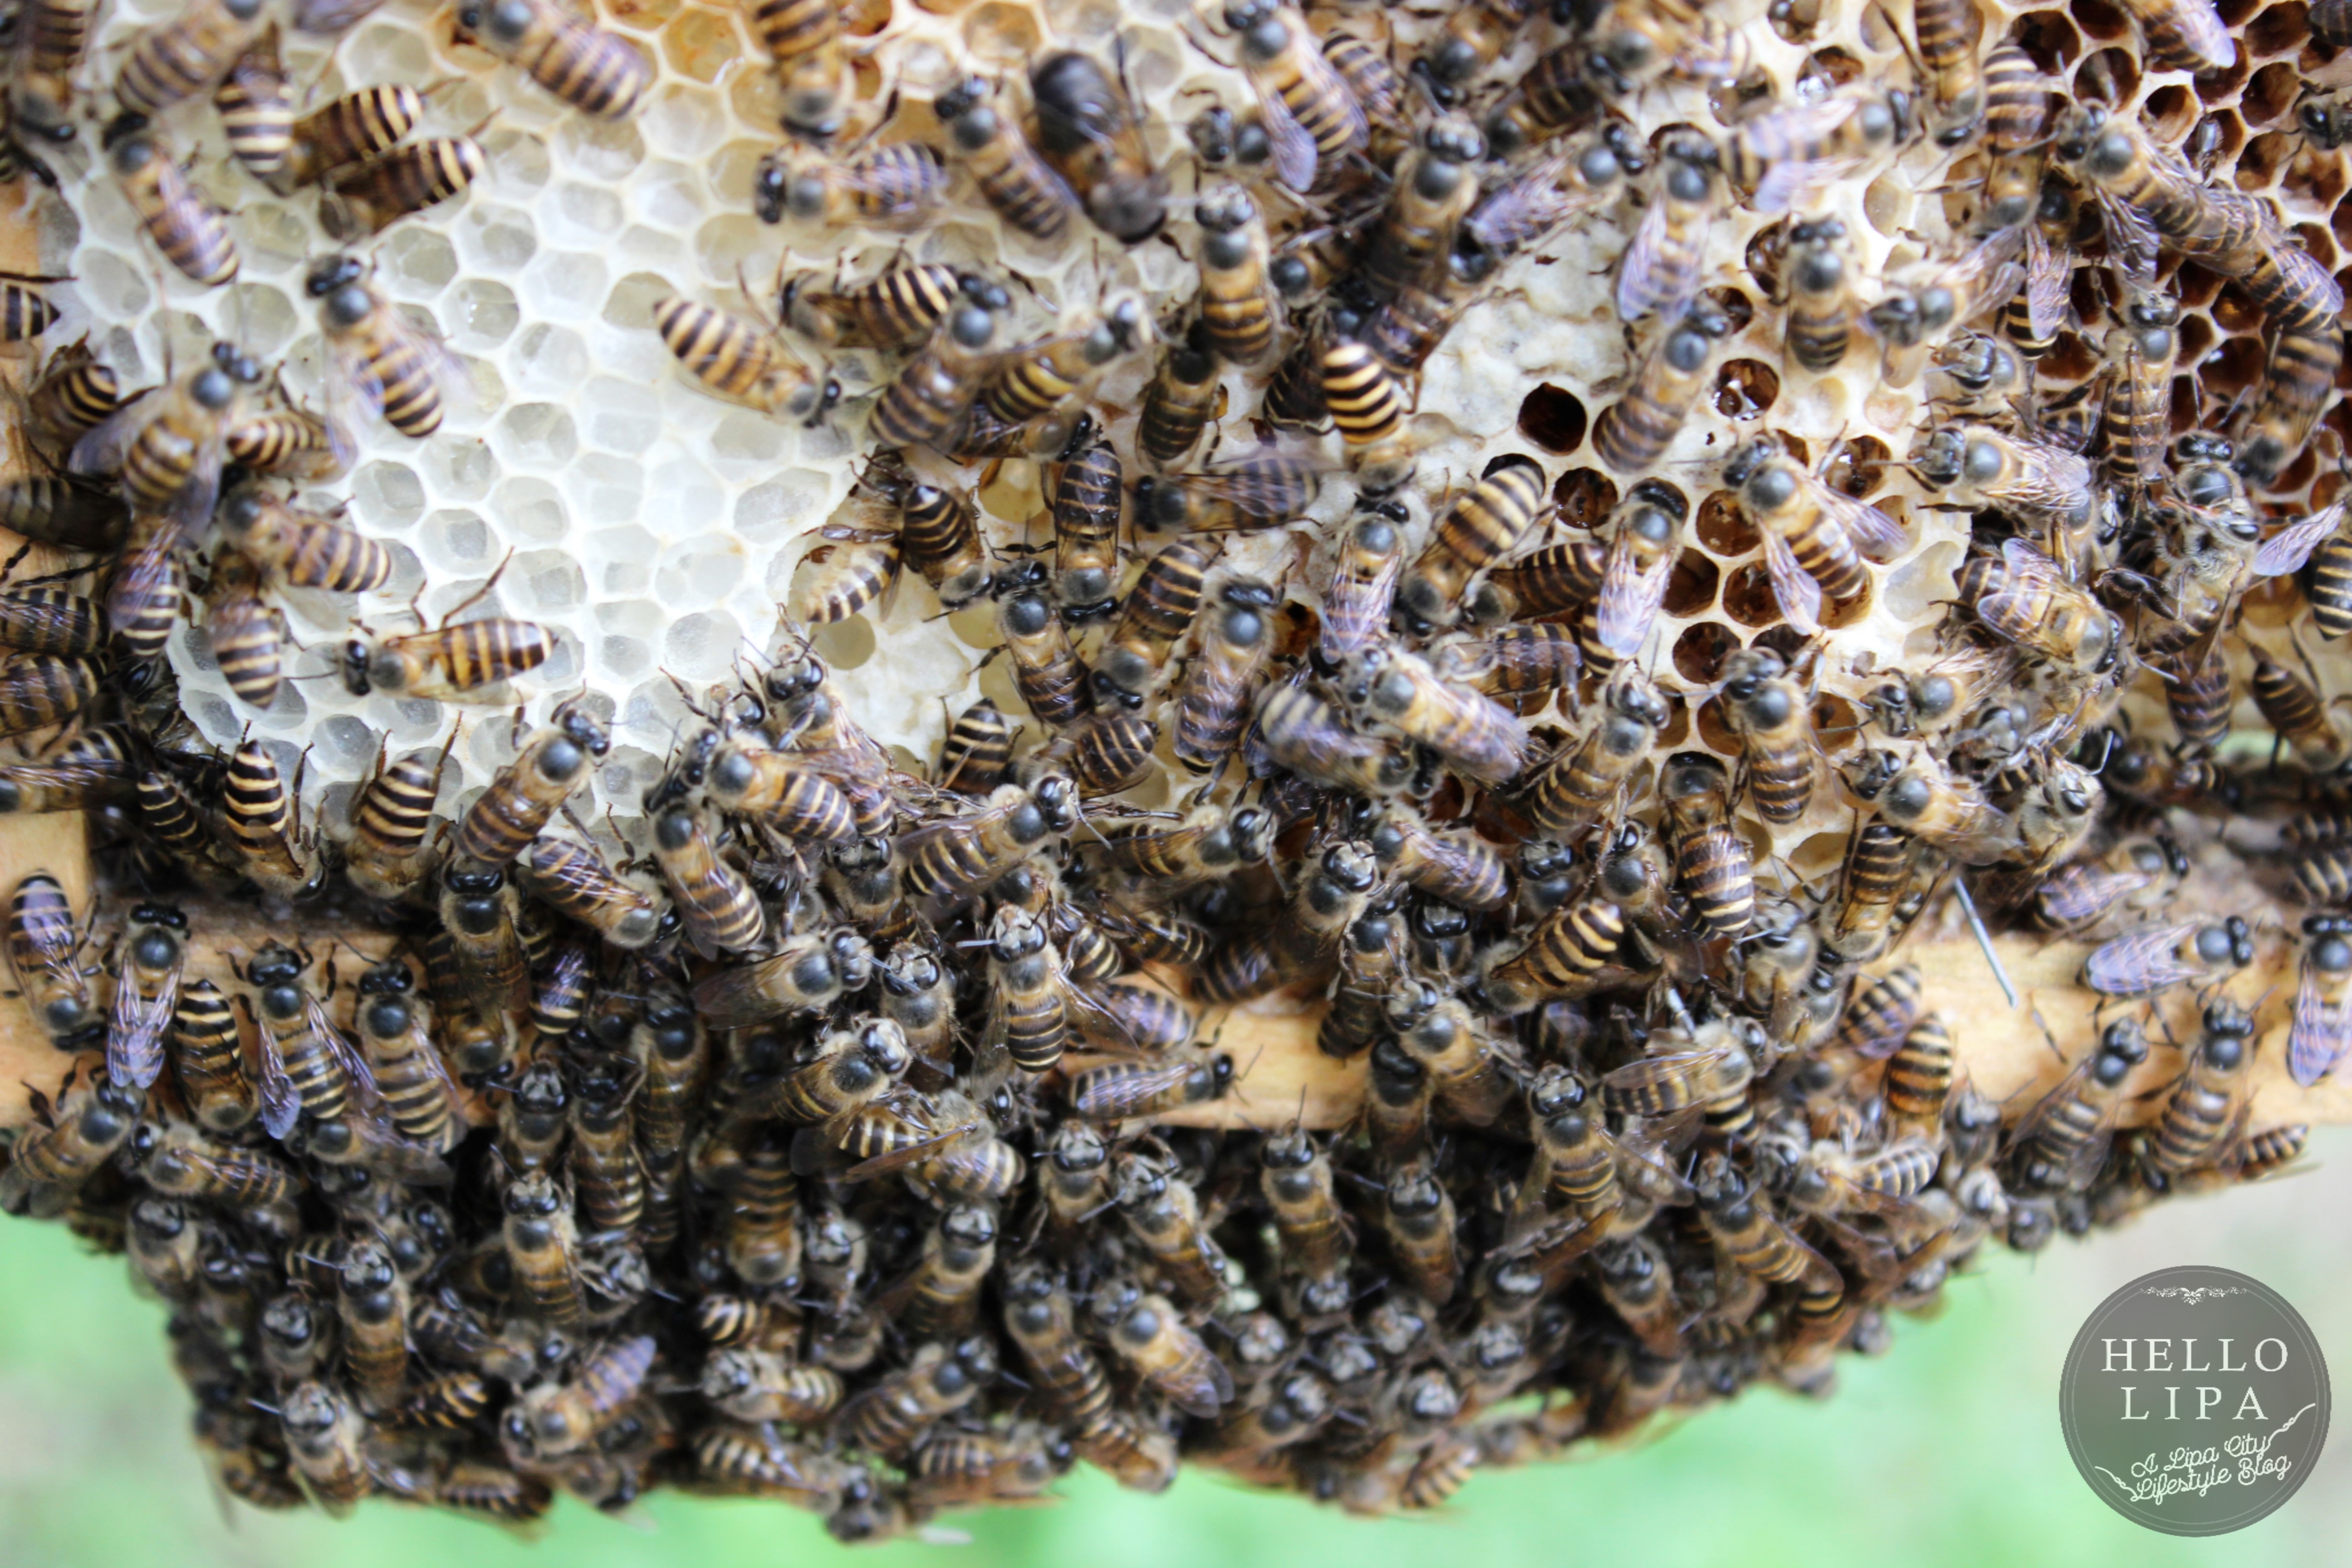 Life is Healthy and Sweet at Honey House Honey Bee Farm